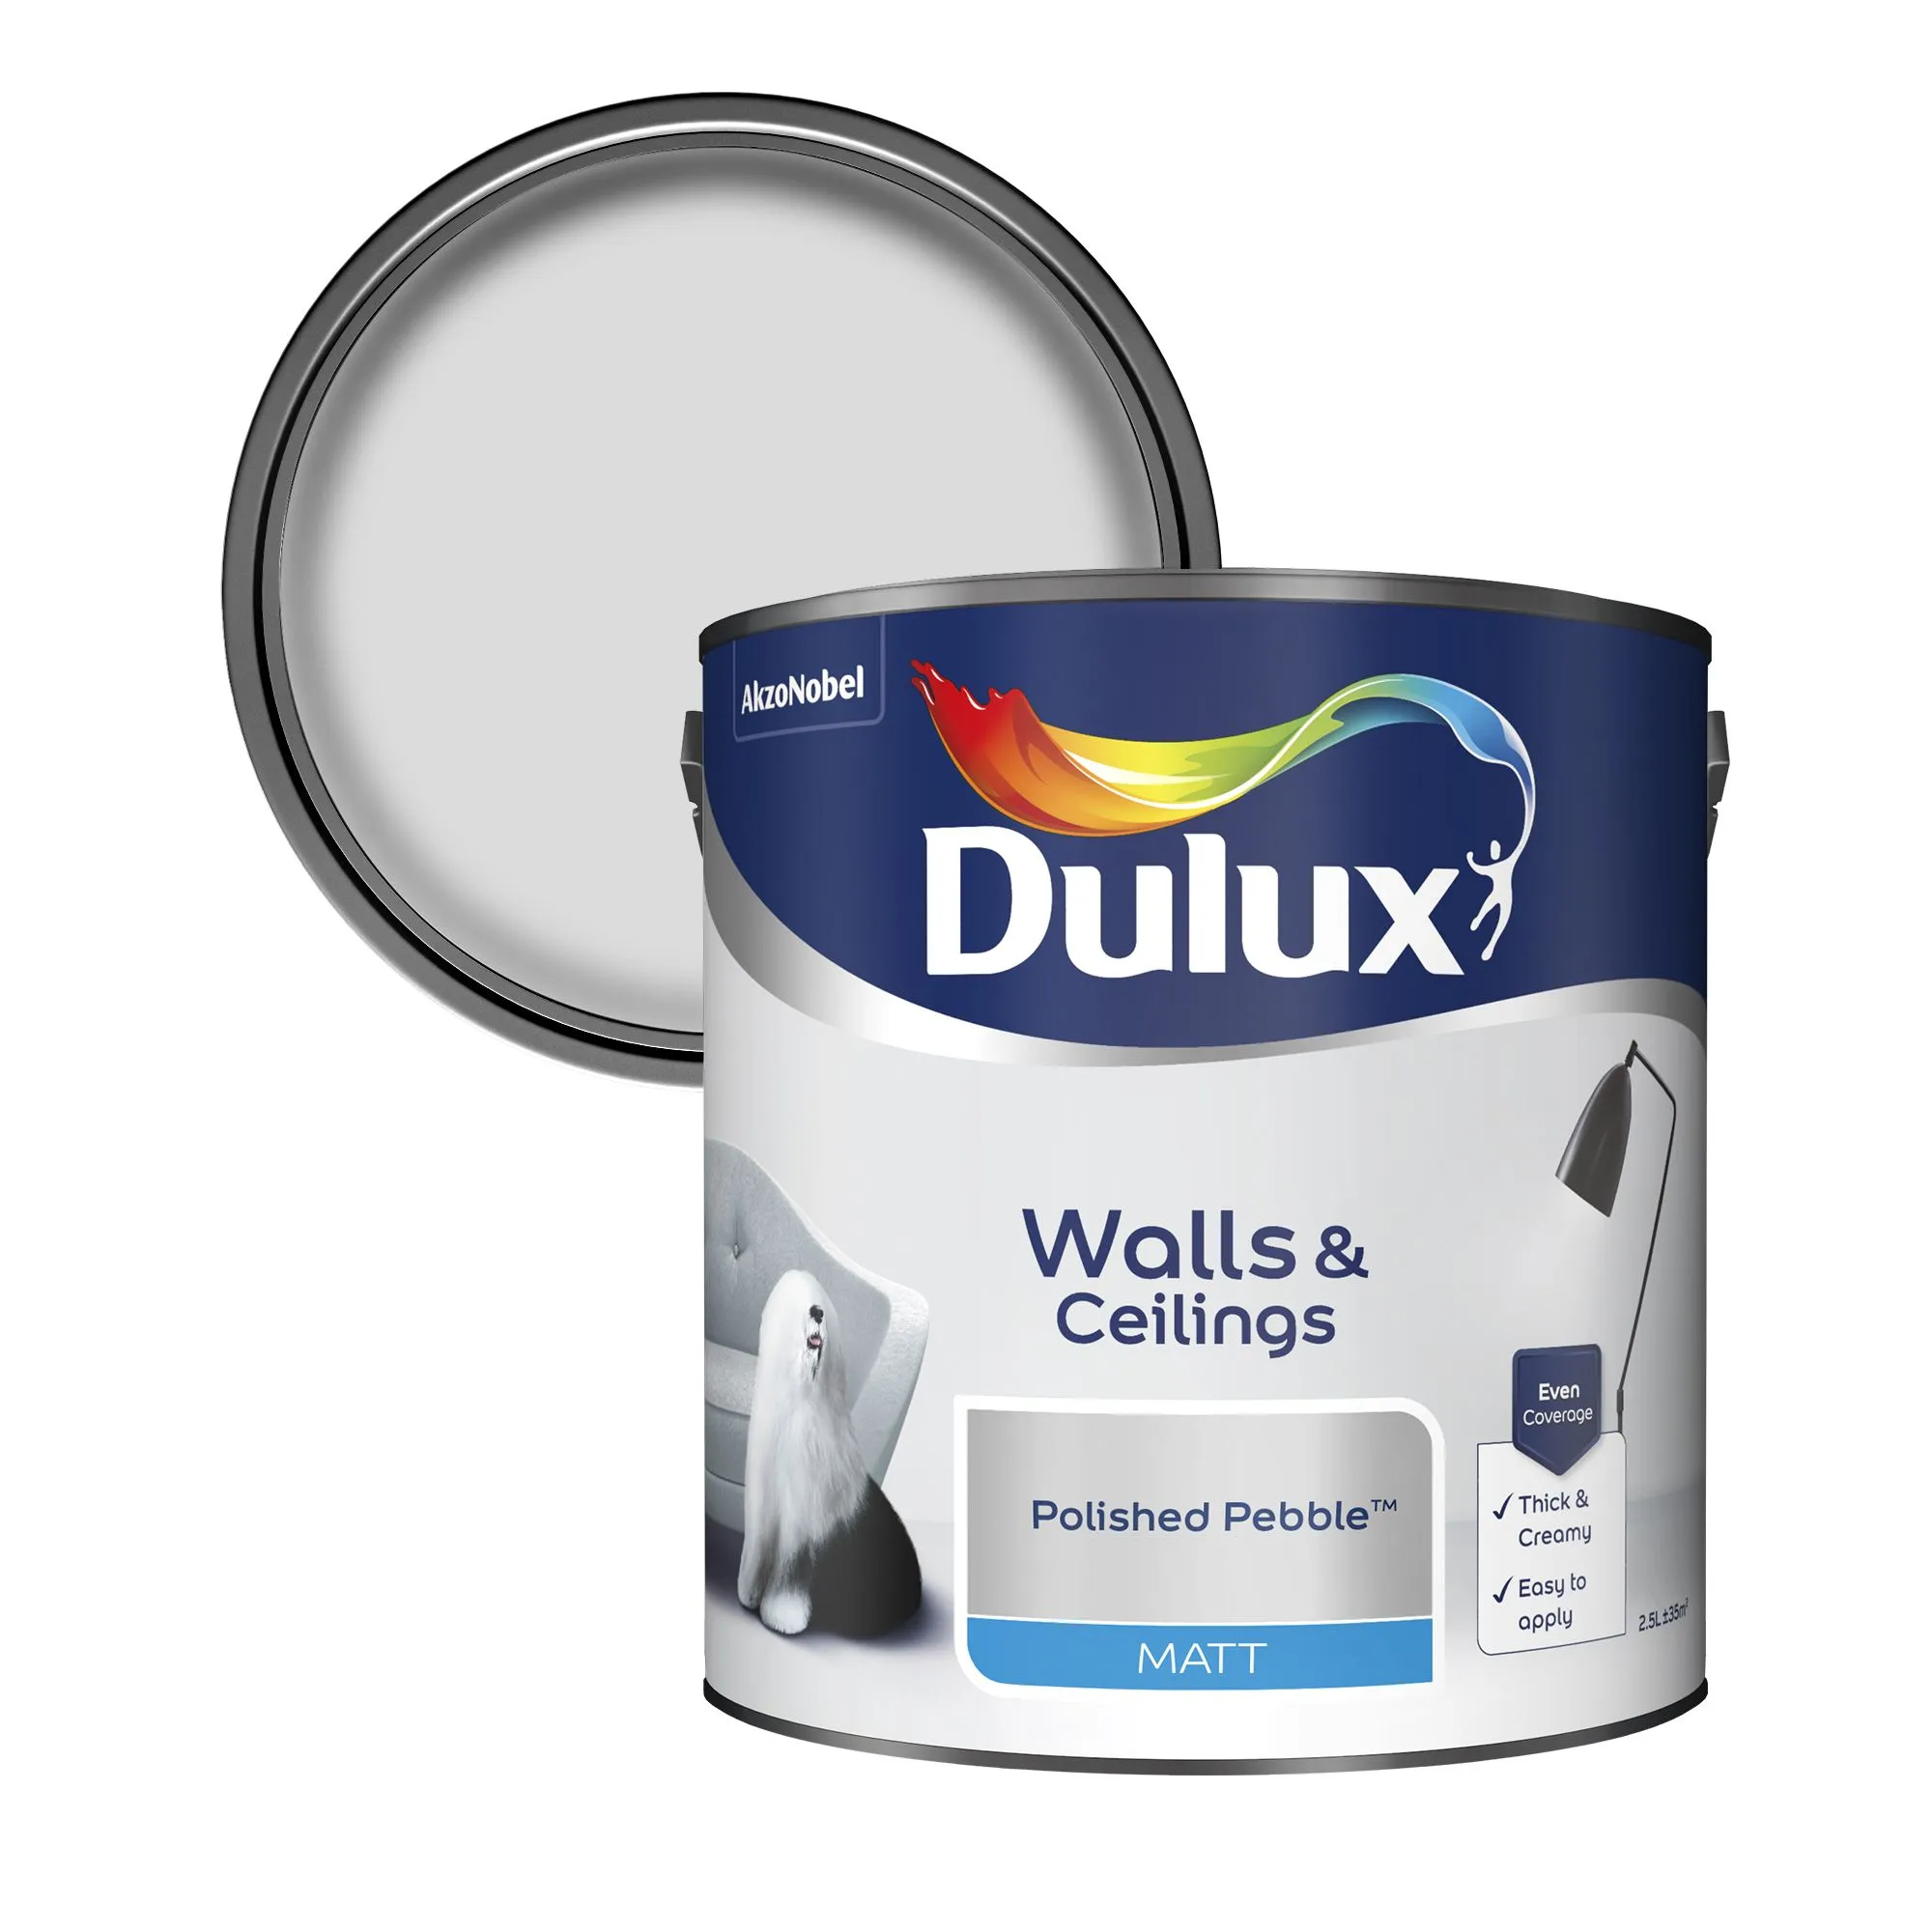 Dulux Polished pebble Matt Emulsion paint, 2.5L